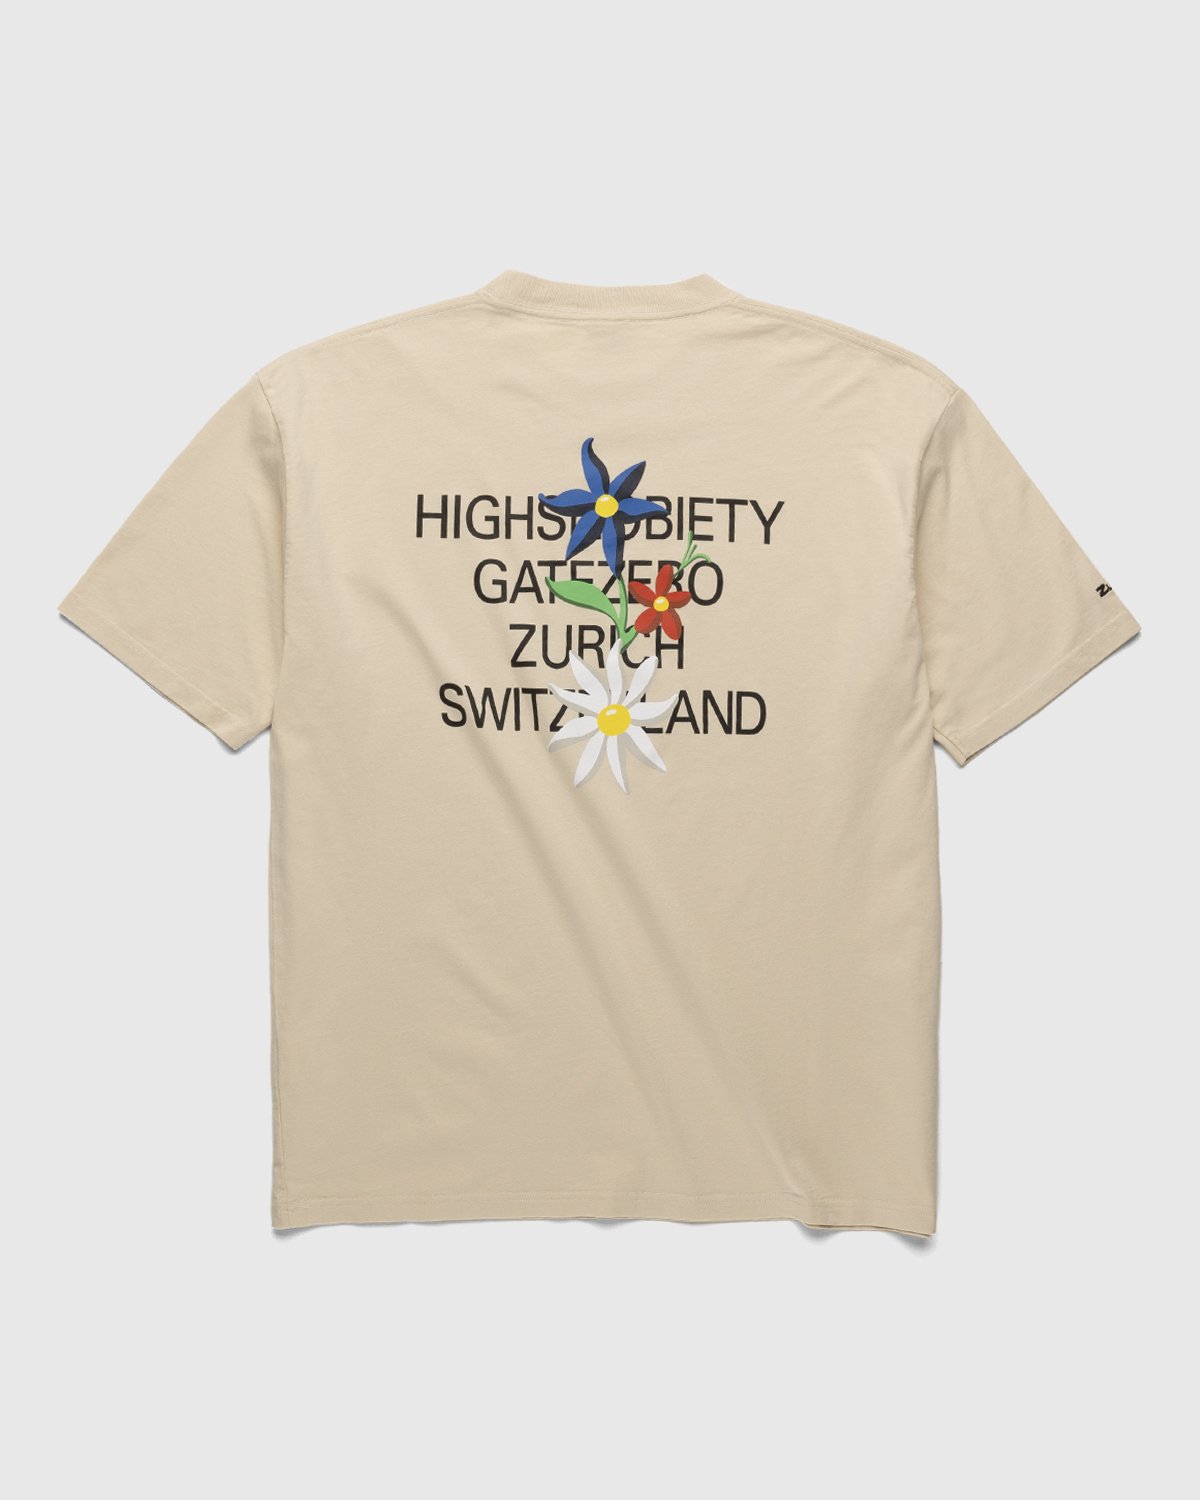 Highsnobiety - GATEZERO City Series 2 T-Shirt Eggshell - Clothing - White - Image 1